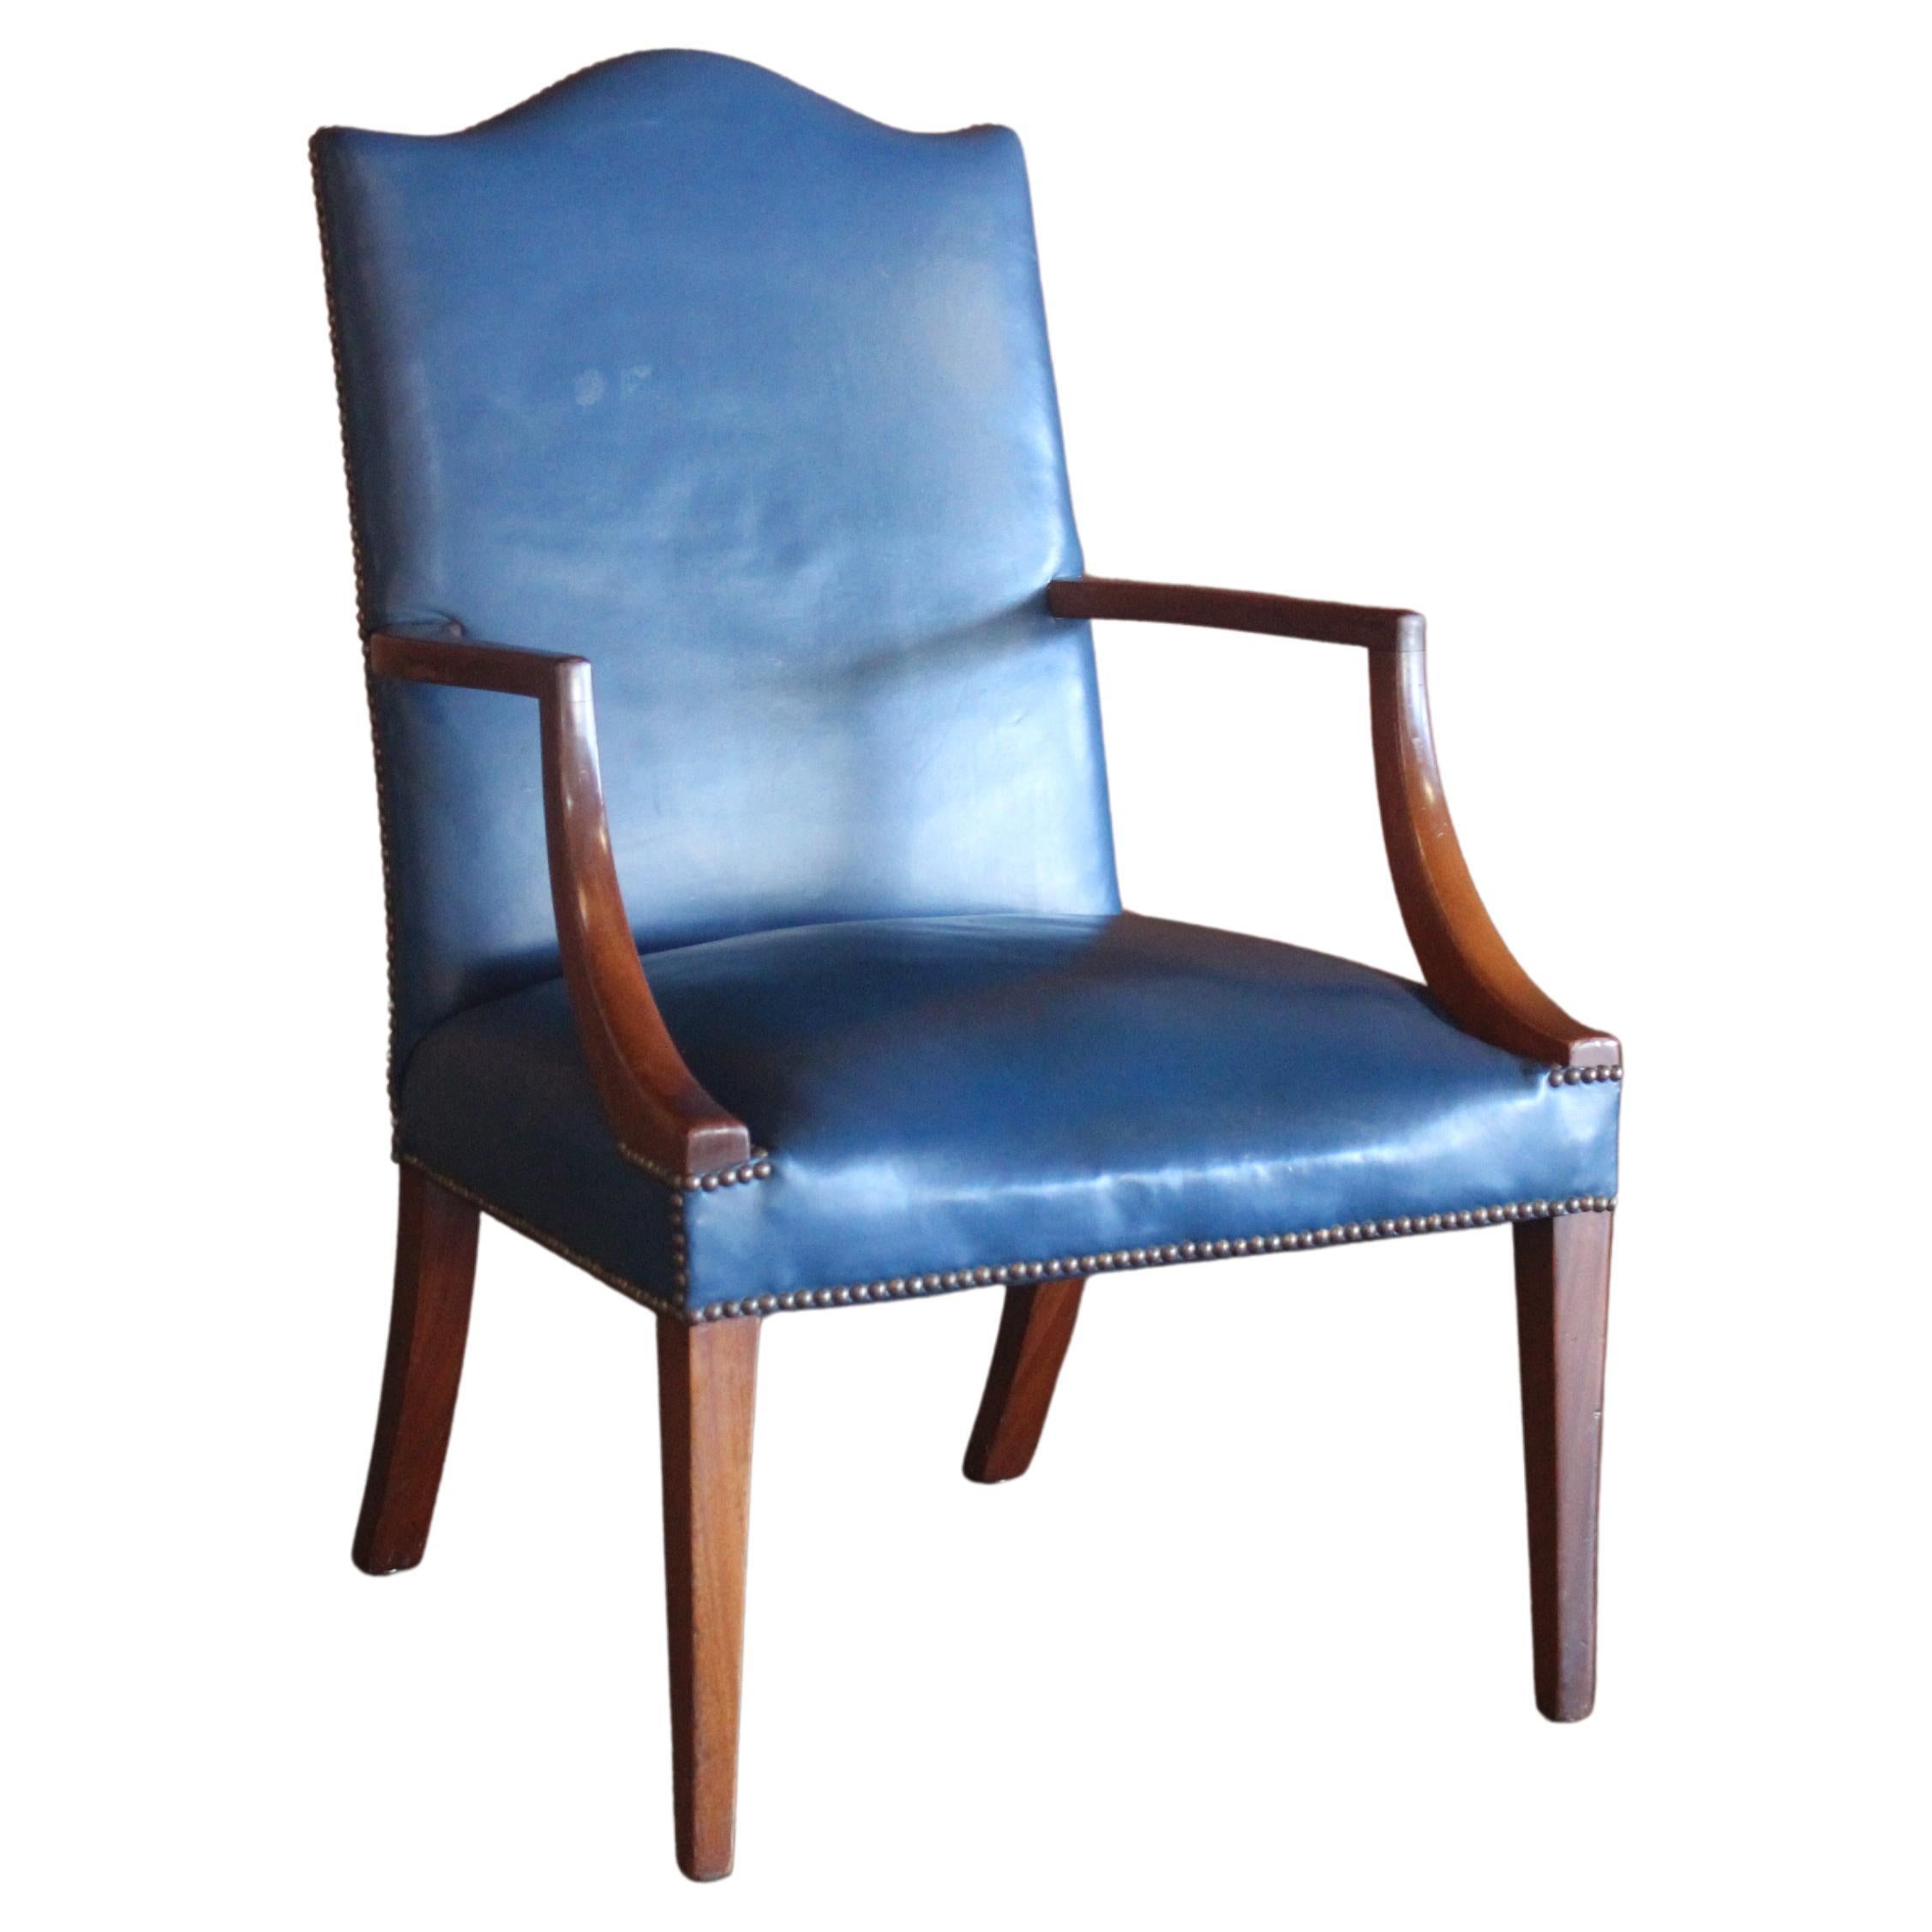 George II Stye Englischer Mahagoni-Sessel in original blauem Leder im Angebot